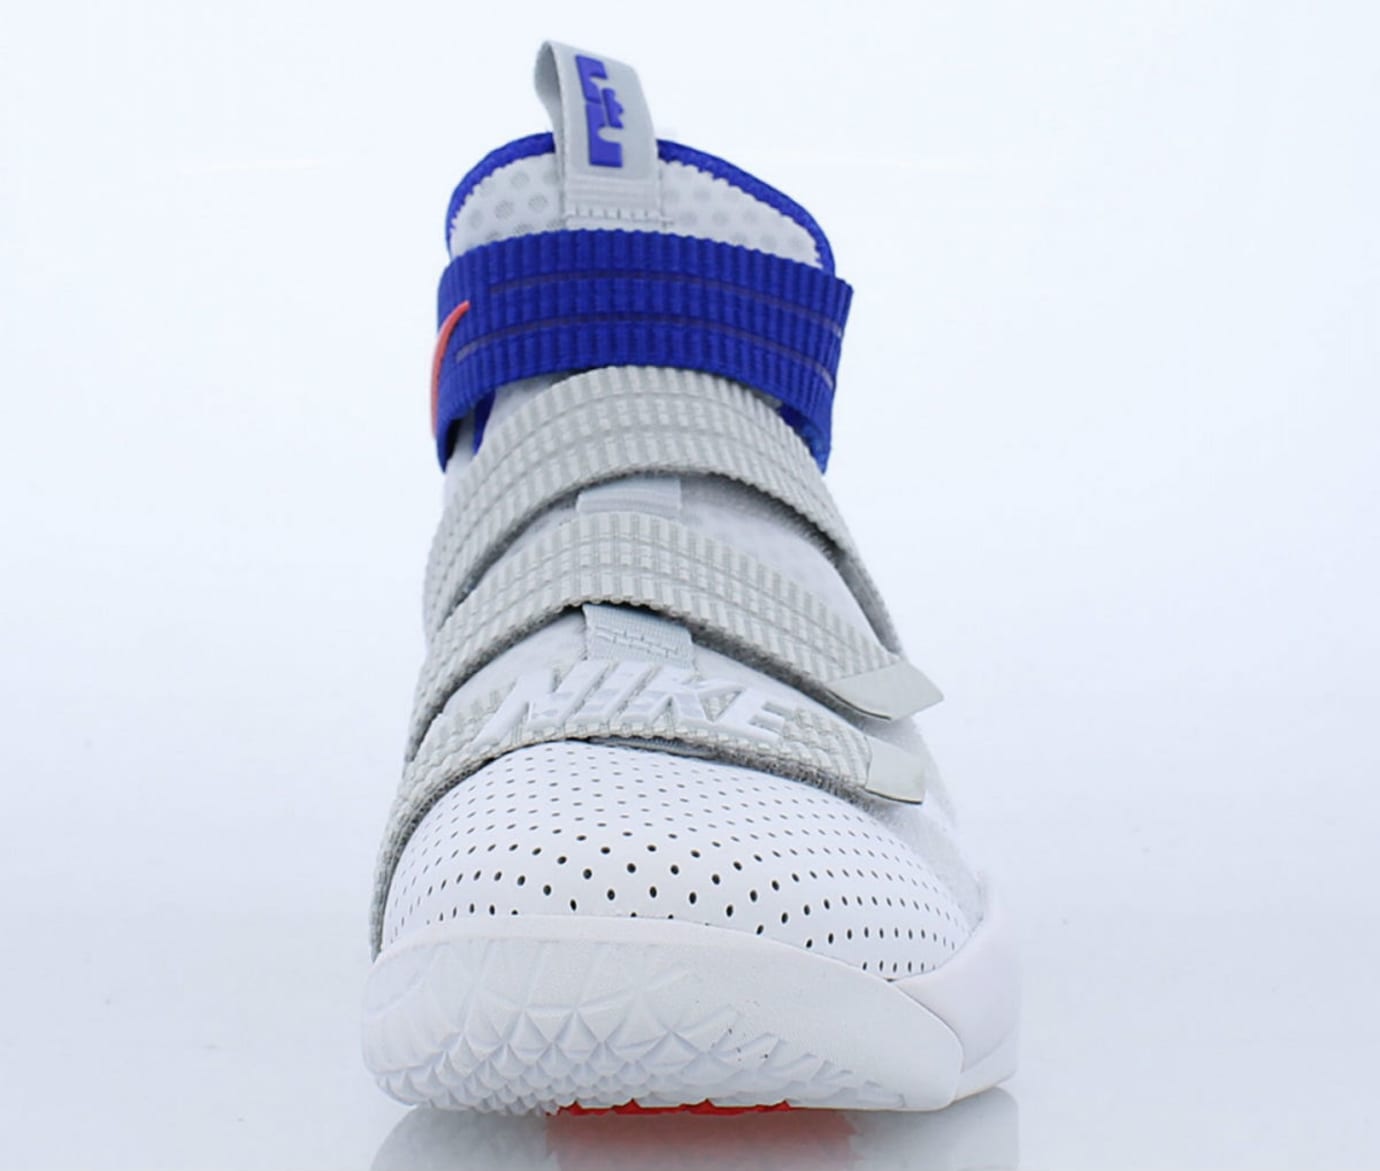 Nike LeBron Soldier 11 Ultramarine Release Date 897646-101 Front